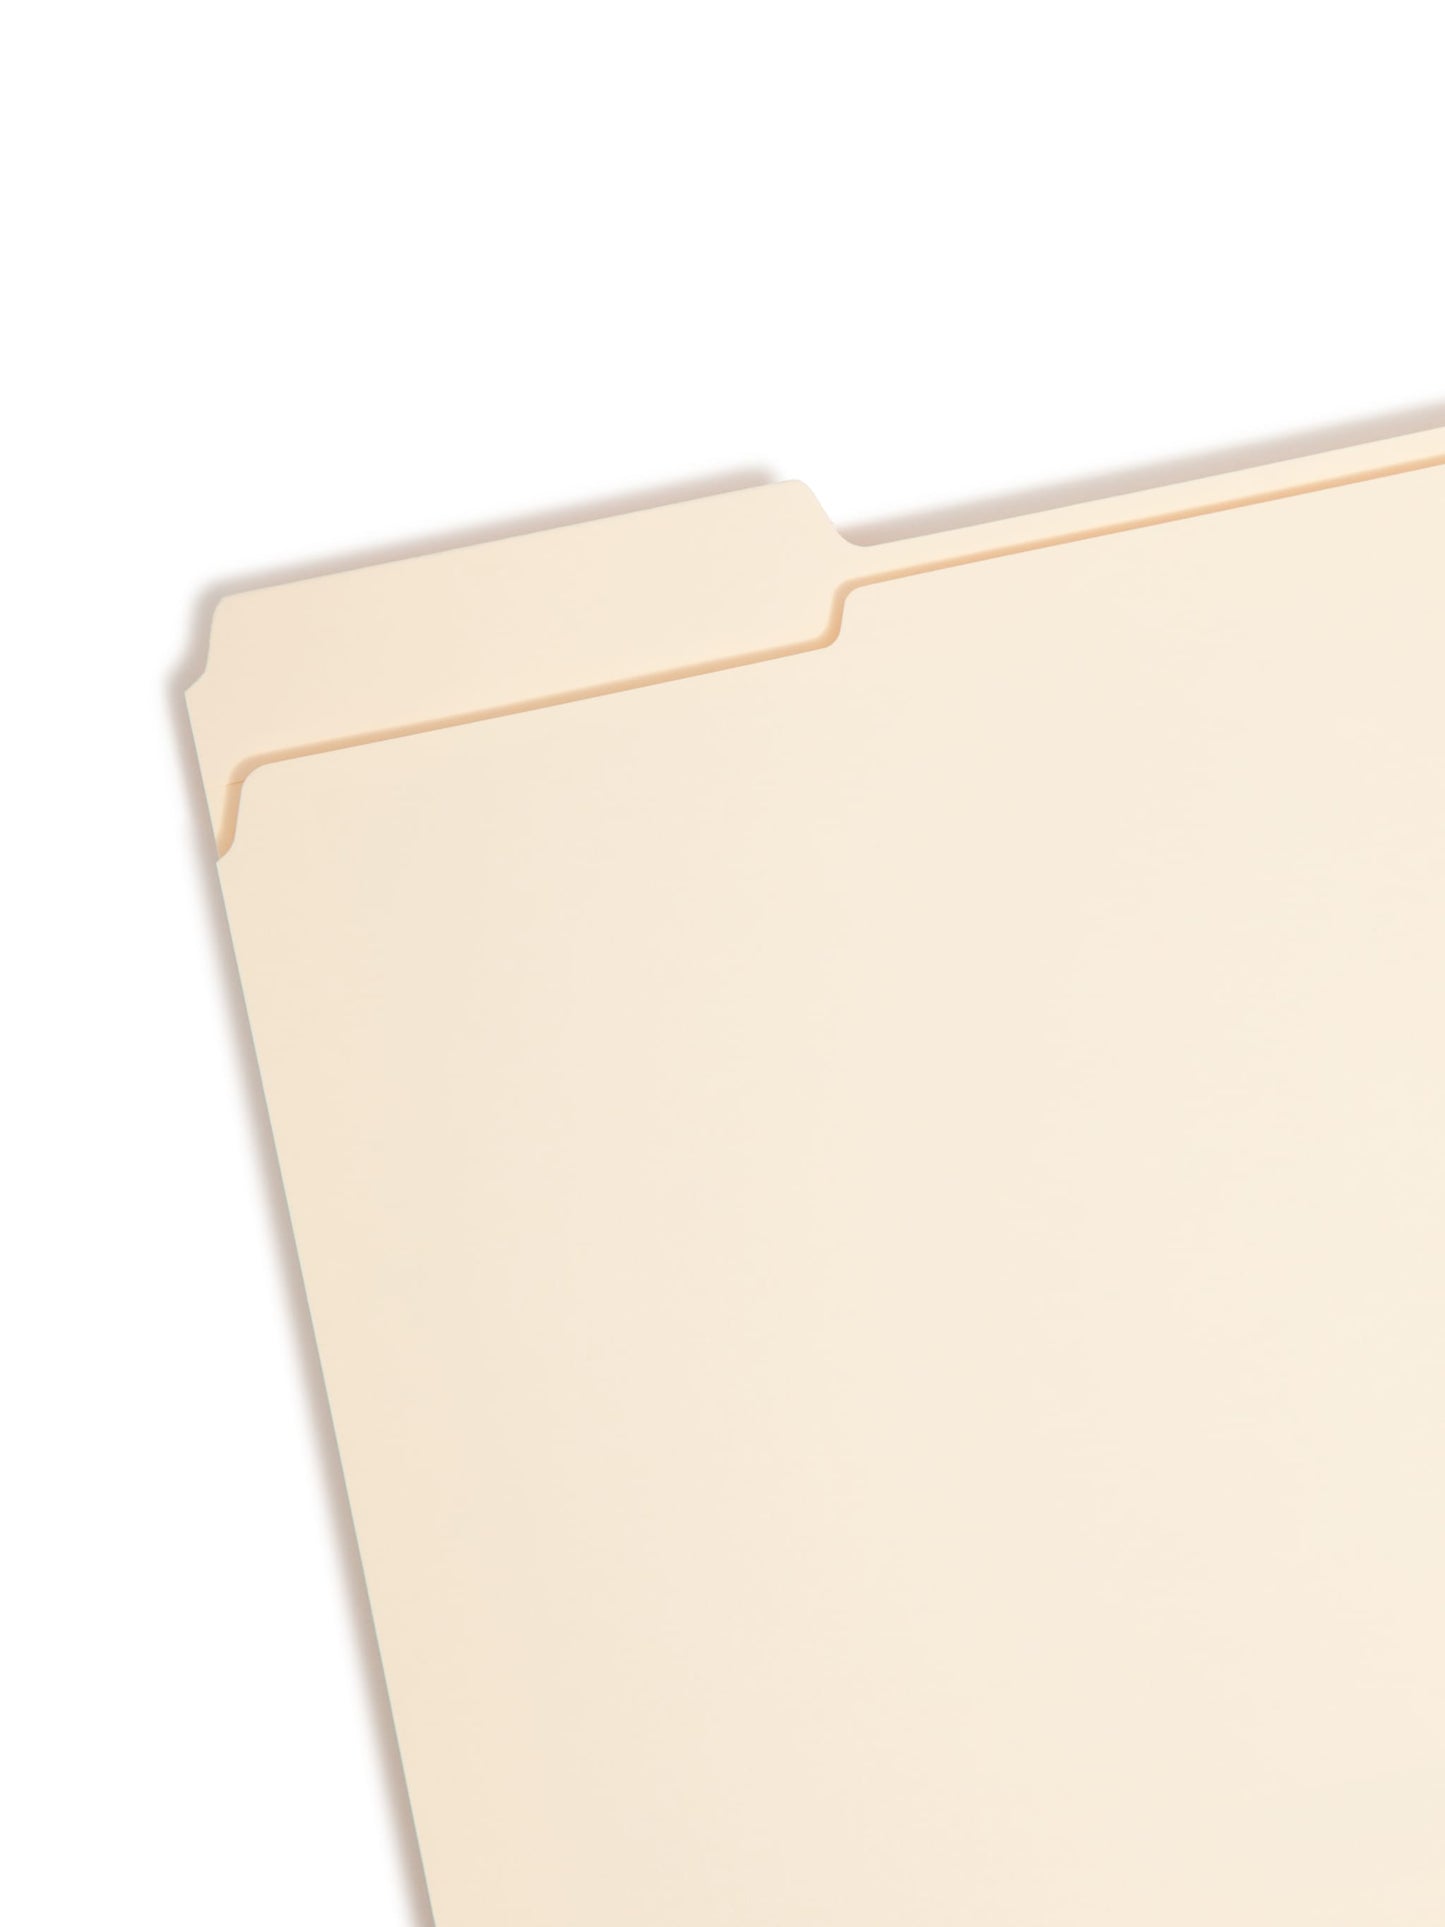 Reinforced Tab Fastener File Folders, 1/3-Cut Tab, 1 Fastener, Manila Color, Letter Size, Set of 50, 086486145343